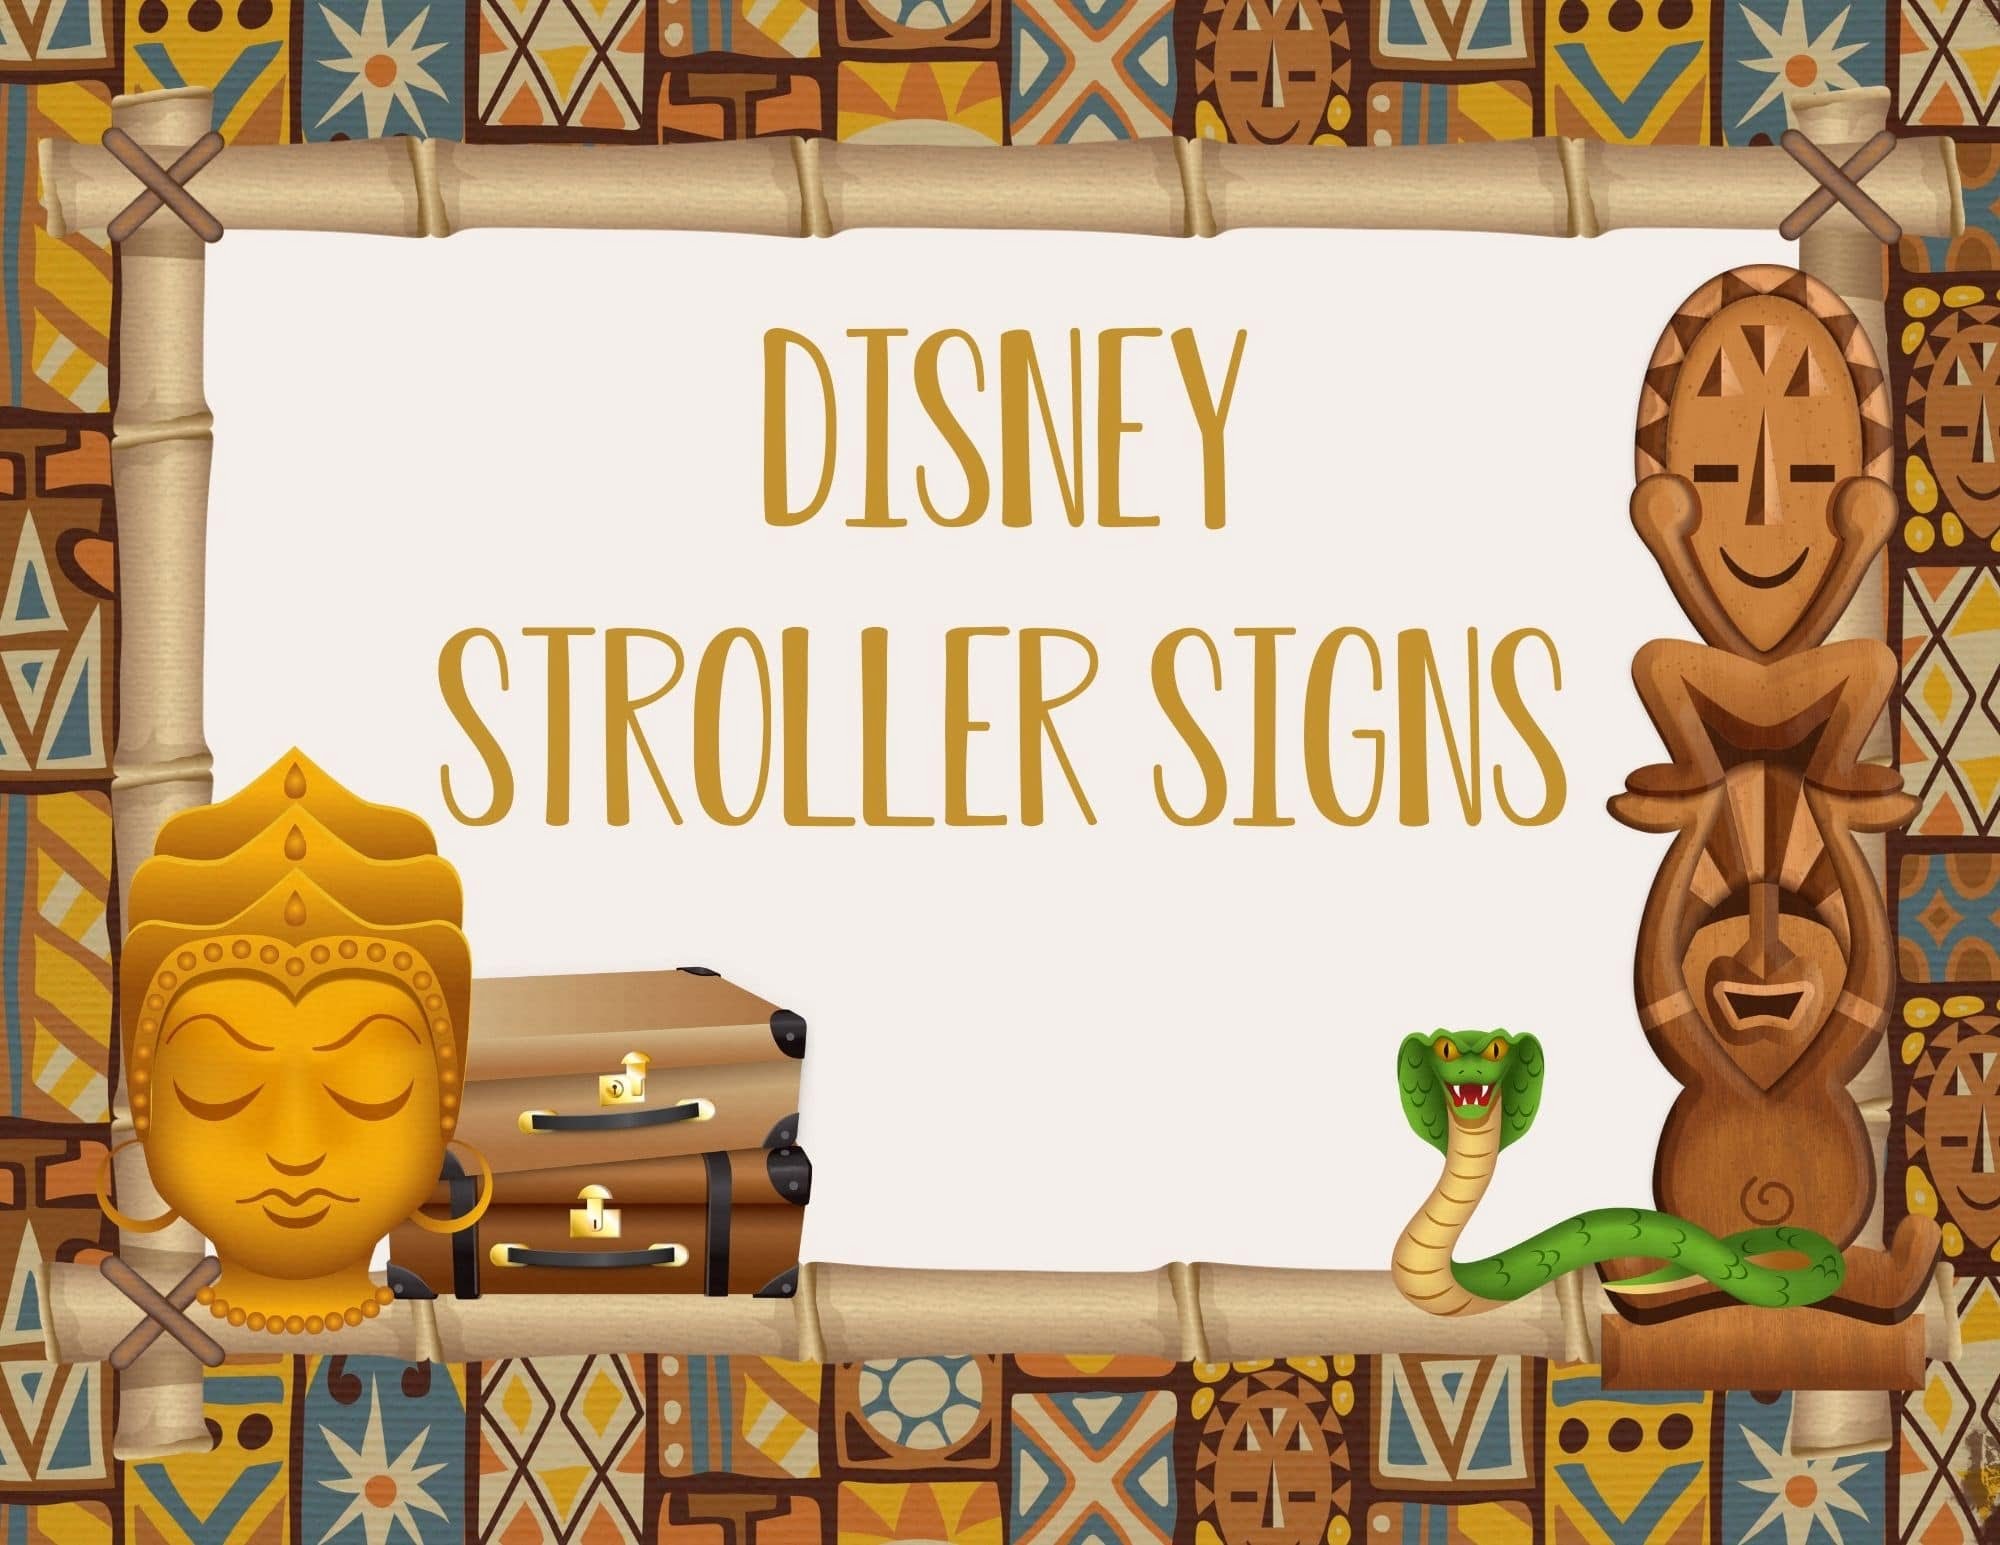 Disney Printable Stroller Signs